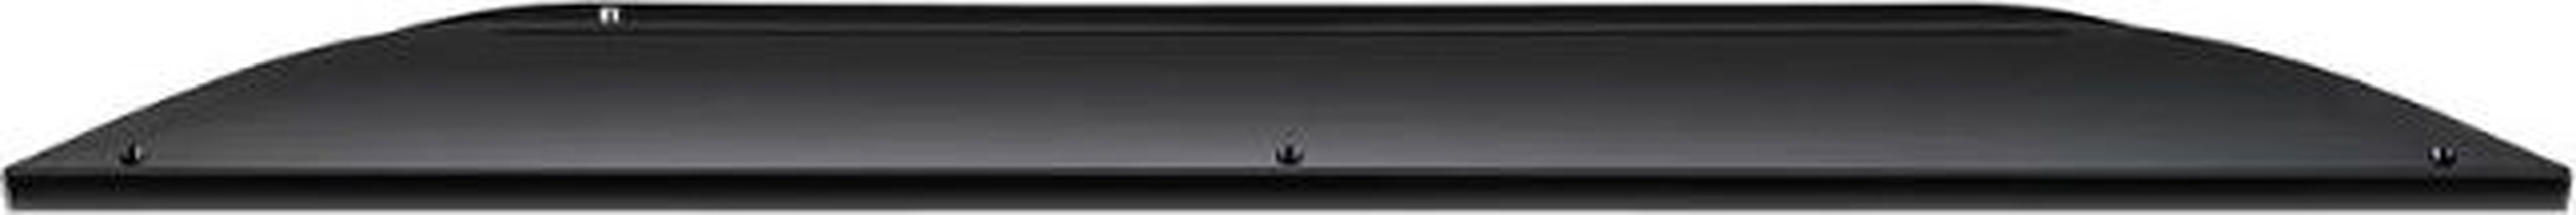 Телевизор 55" LCD "LG" [55US662H0ZC]; 4K Ultra HD (3840x2160) Smart TV, Wi-Fi